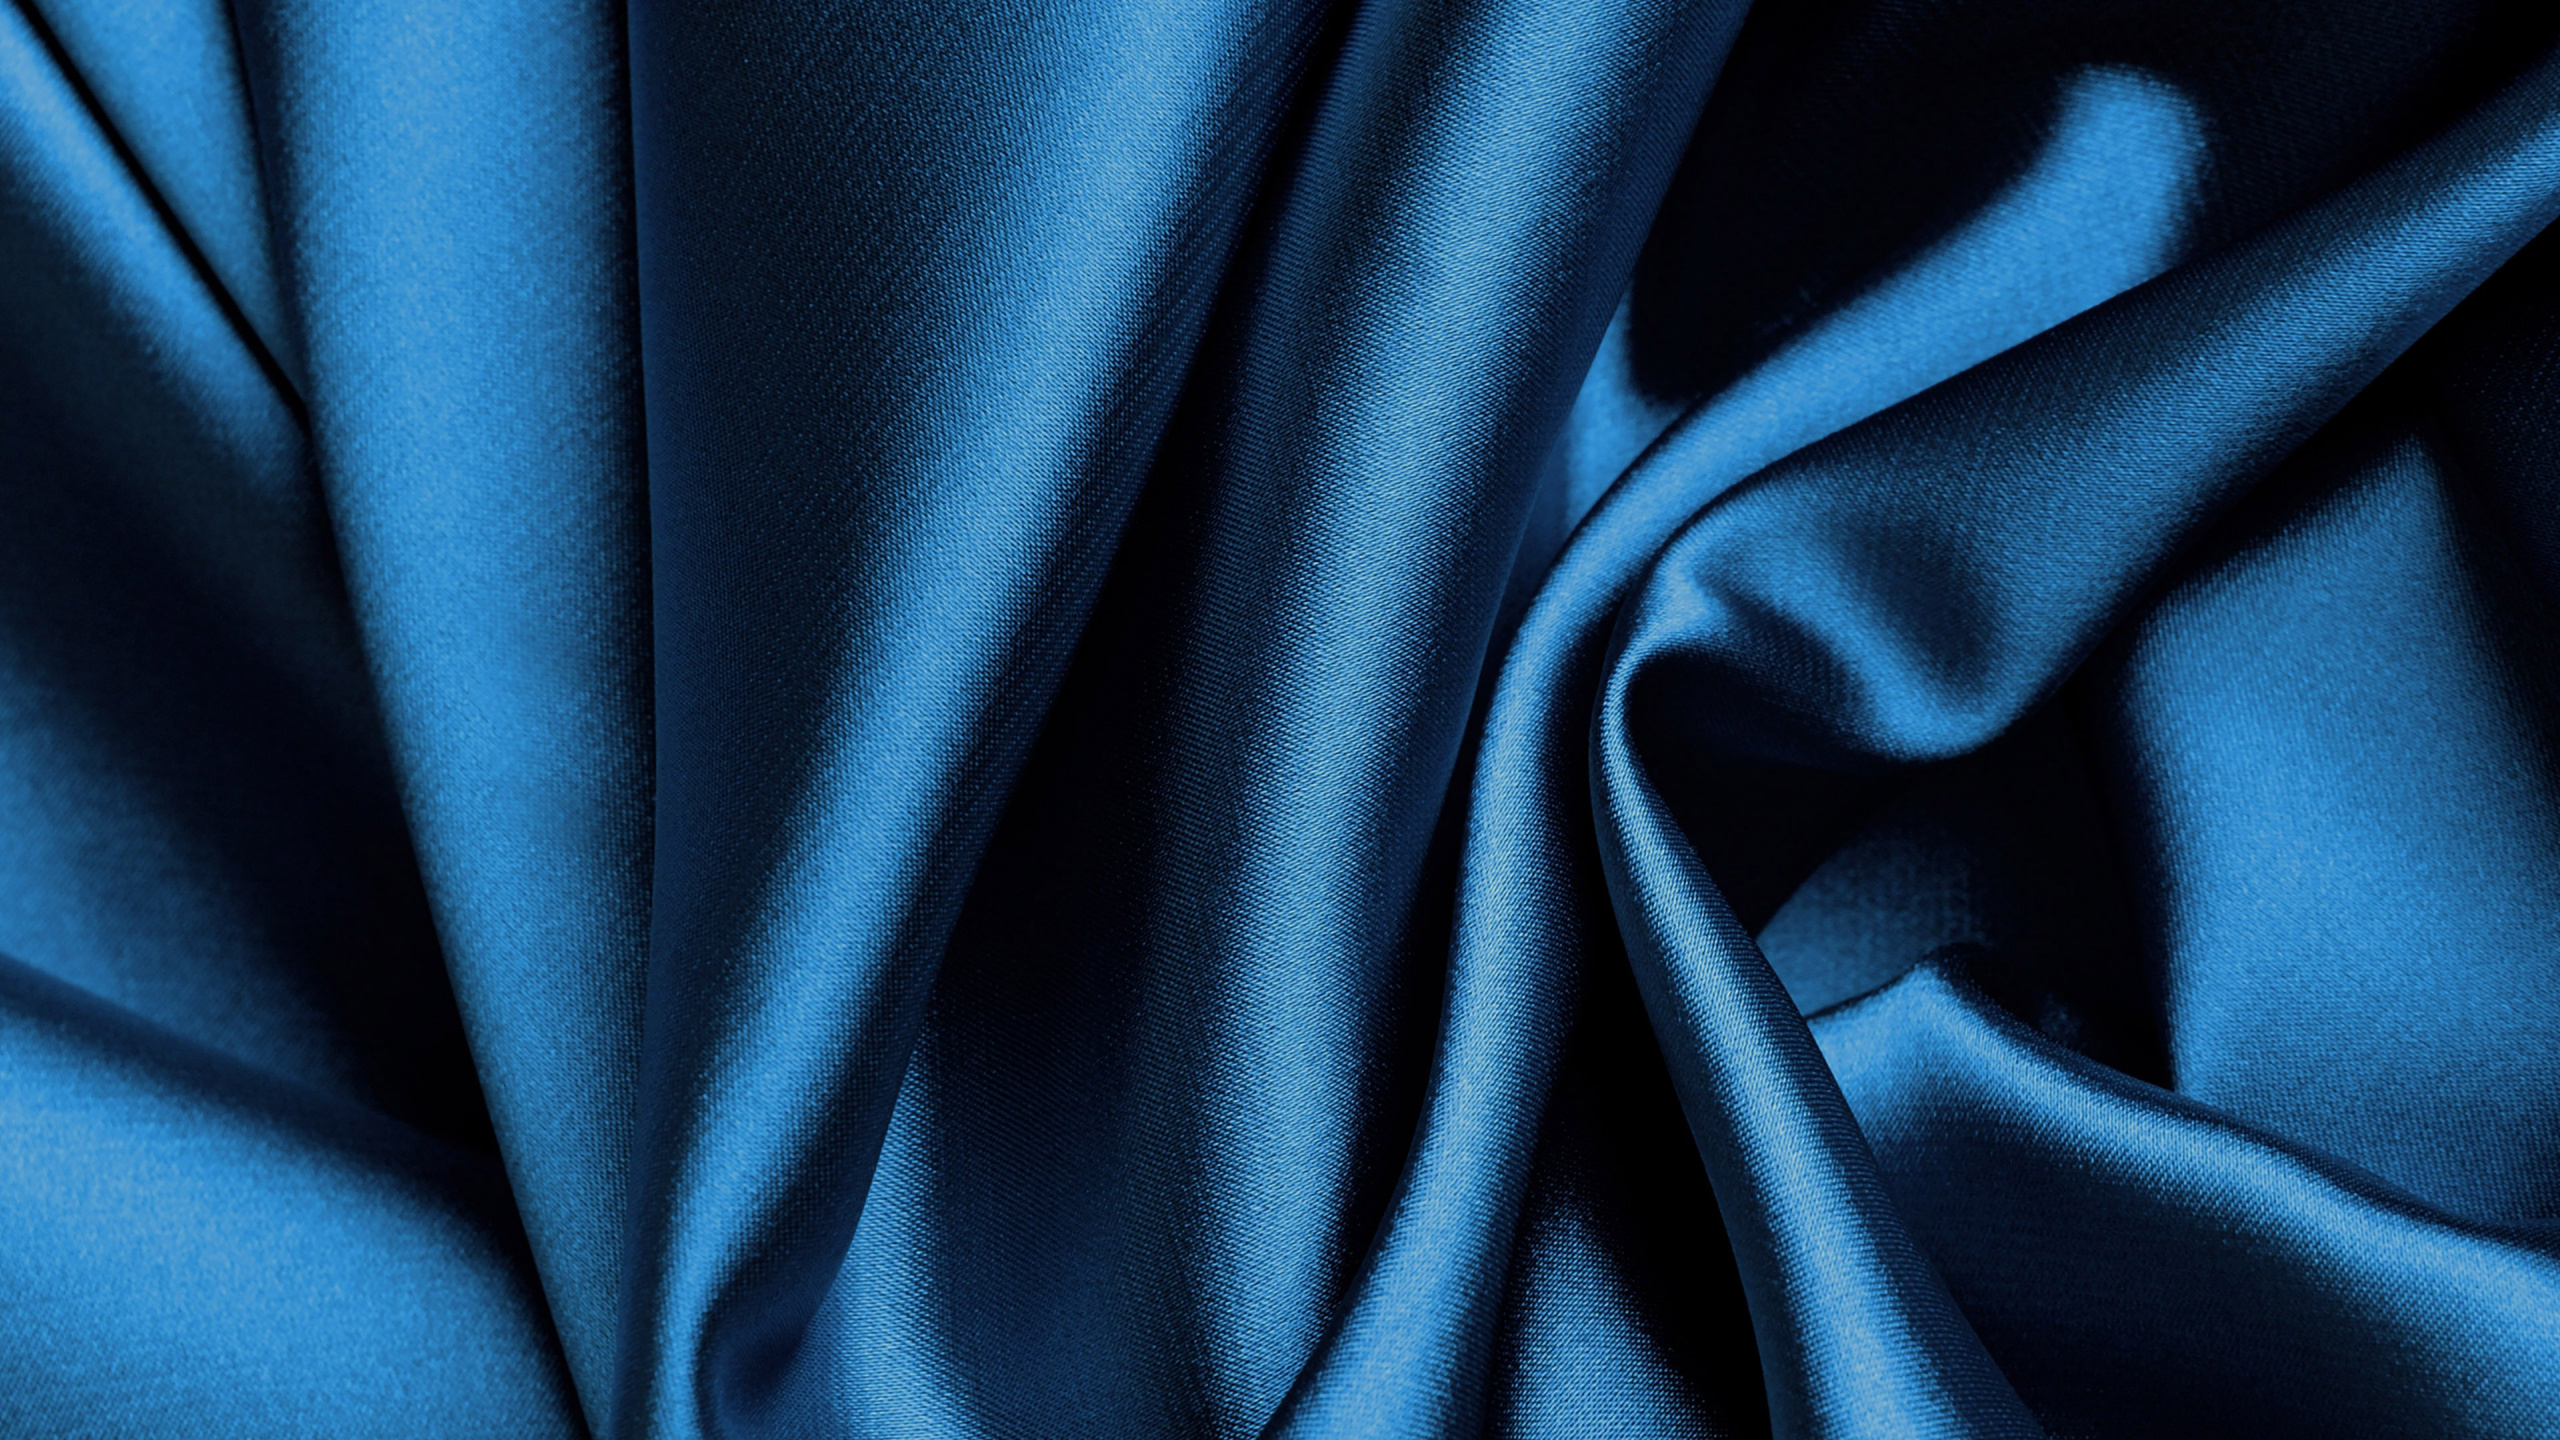 Textil Azul en Fotografía de Cerca. Wallpaper in 2560x1440 Resolution